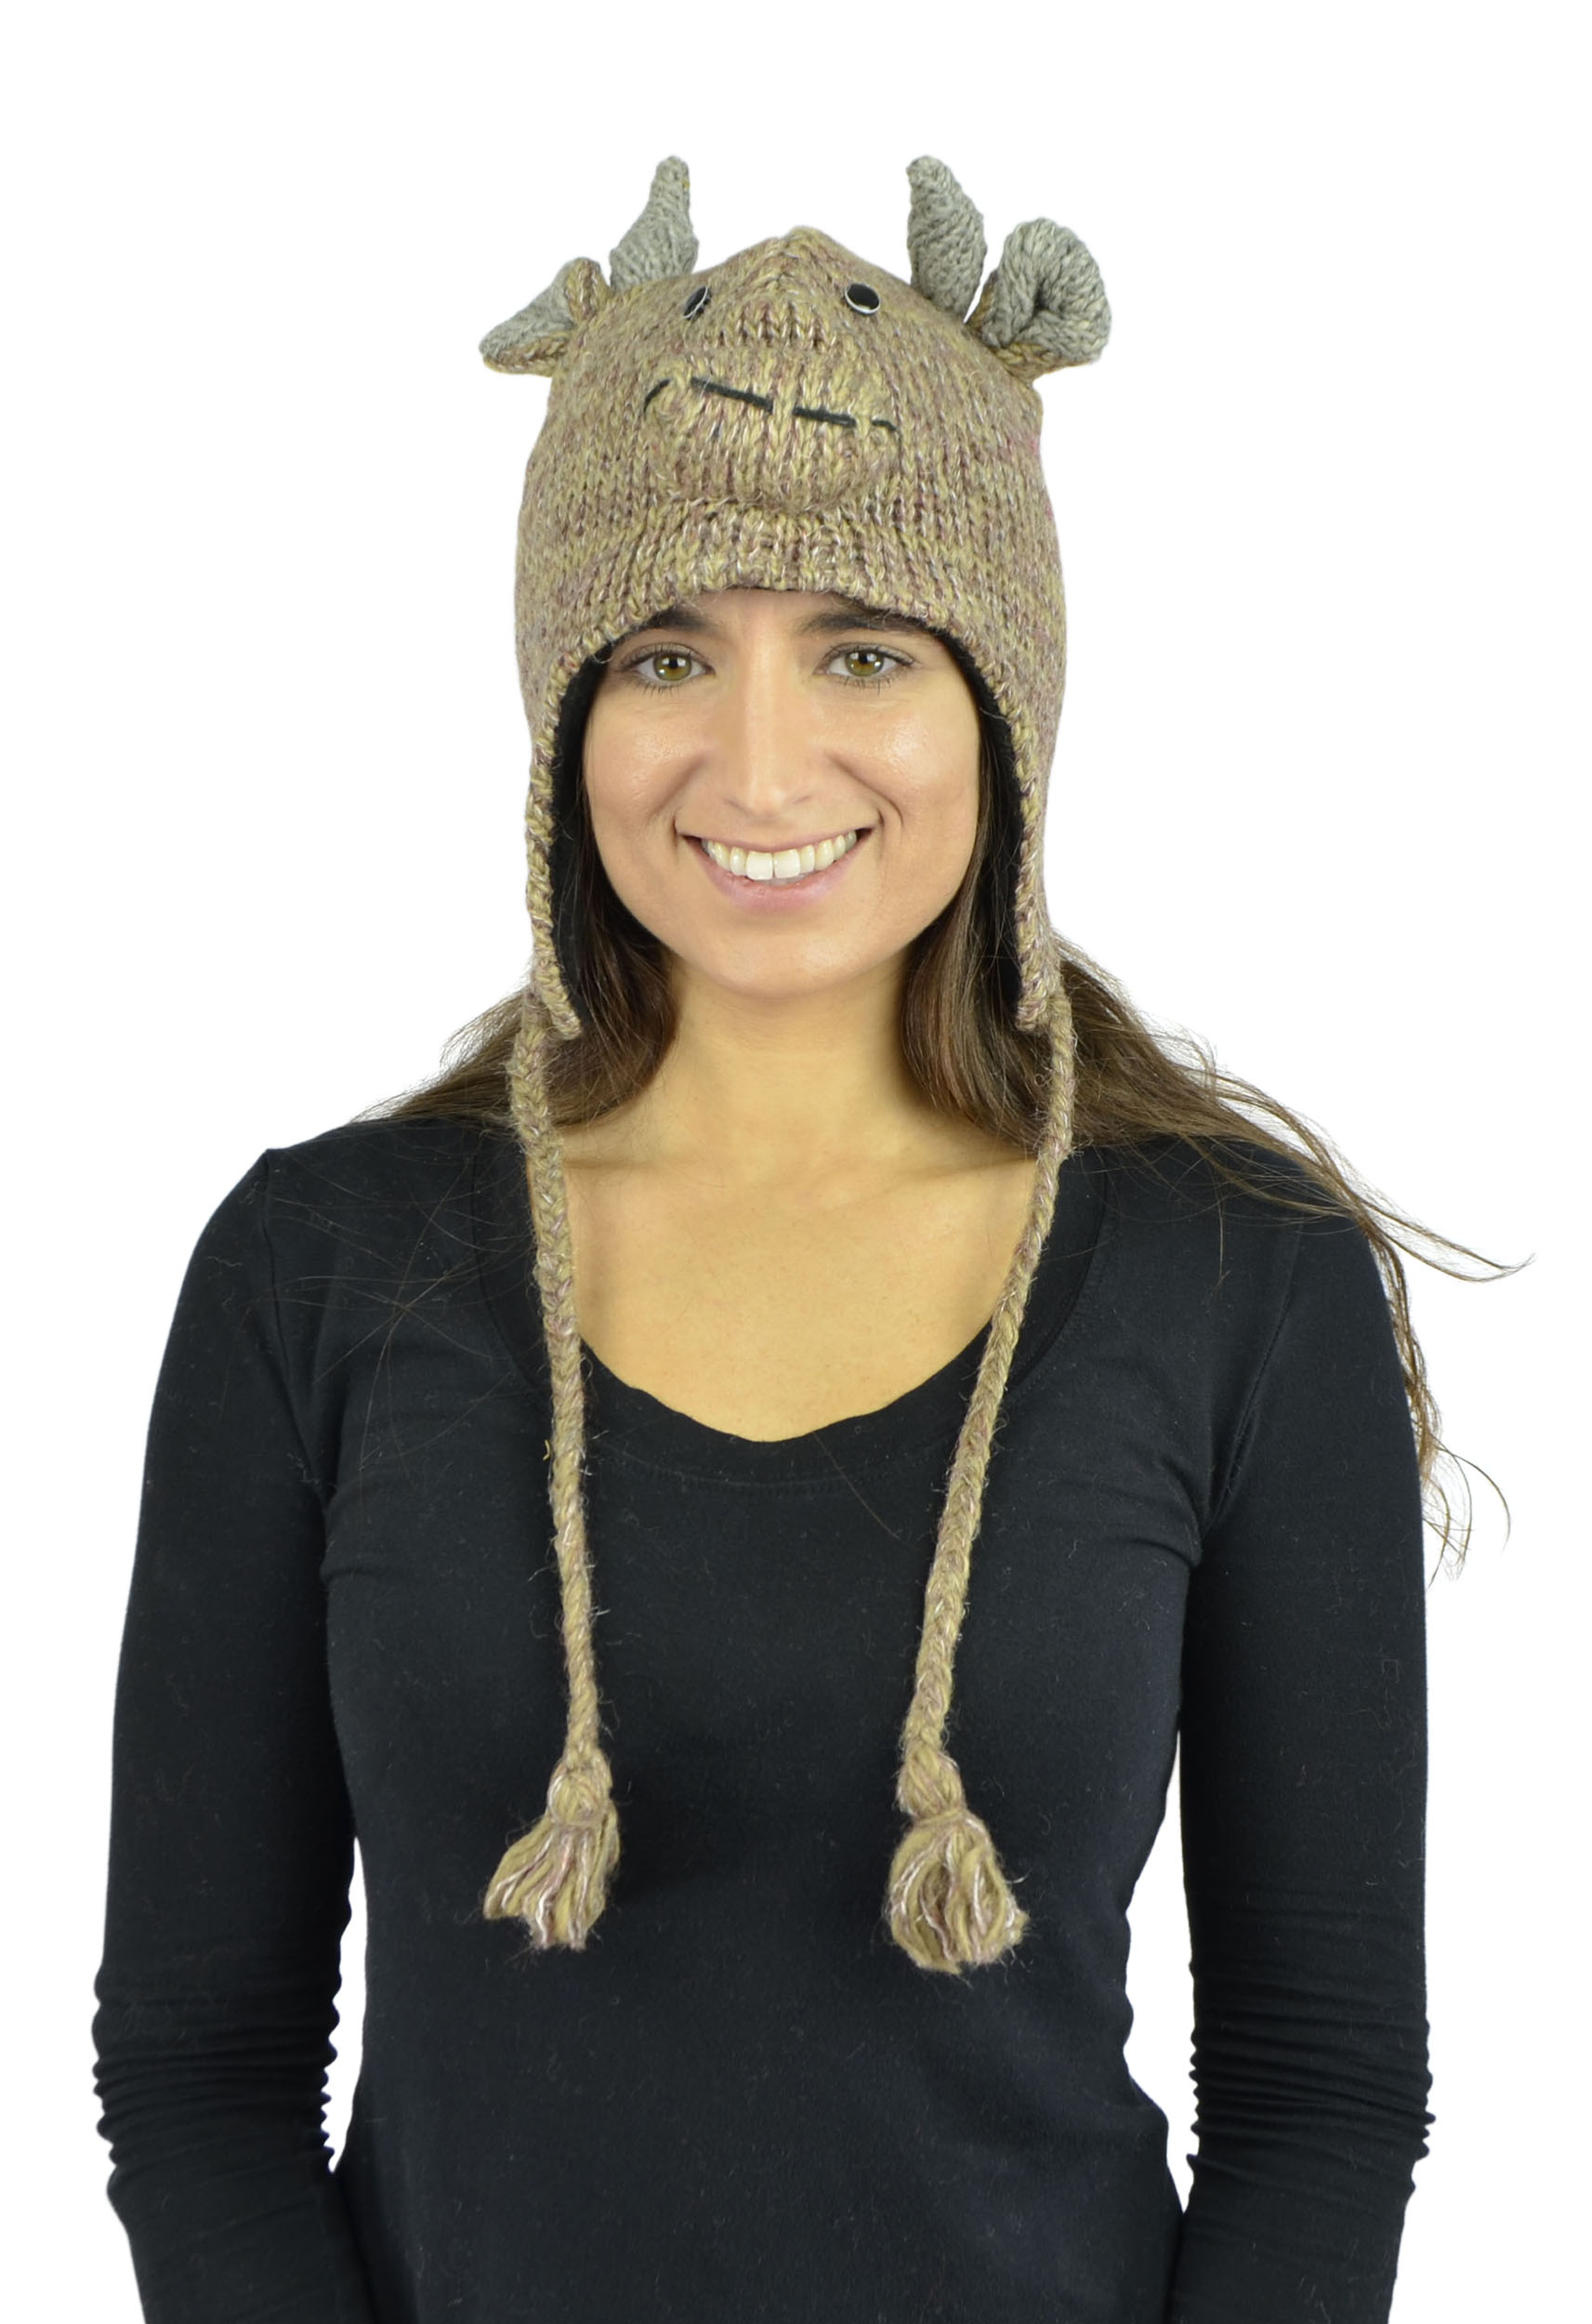 Belle Donne - Unisex Winter Knit Bull Animal Hats With Pom Pom - LightBrown